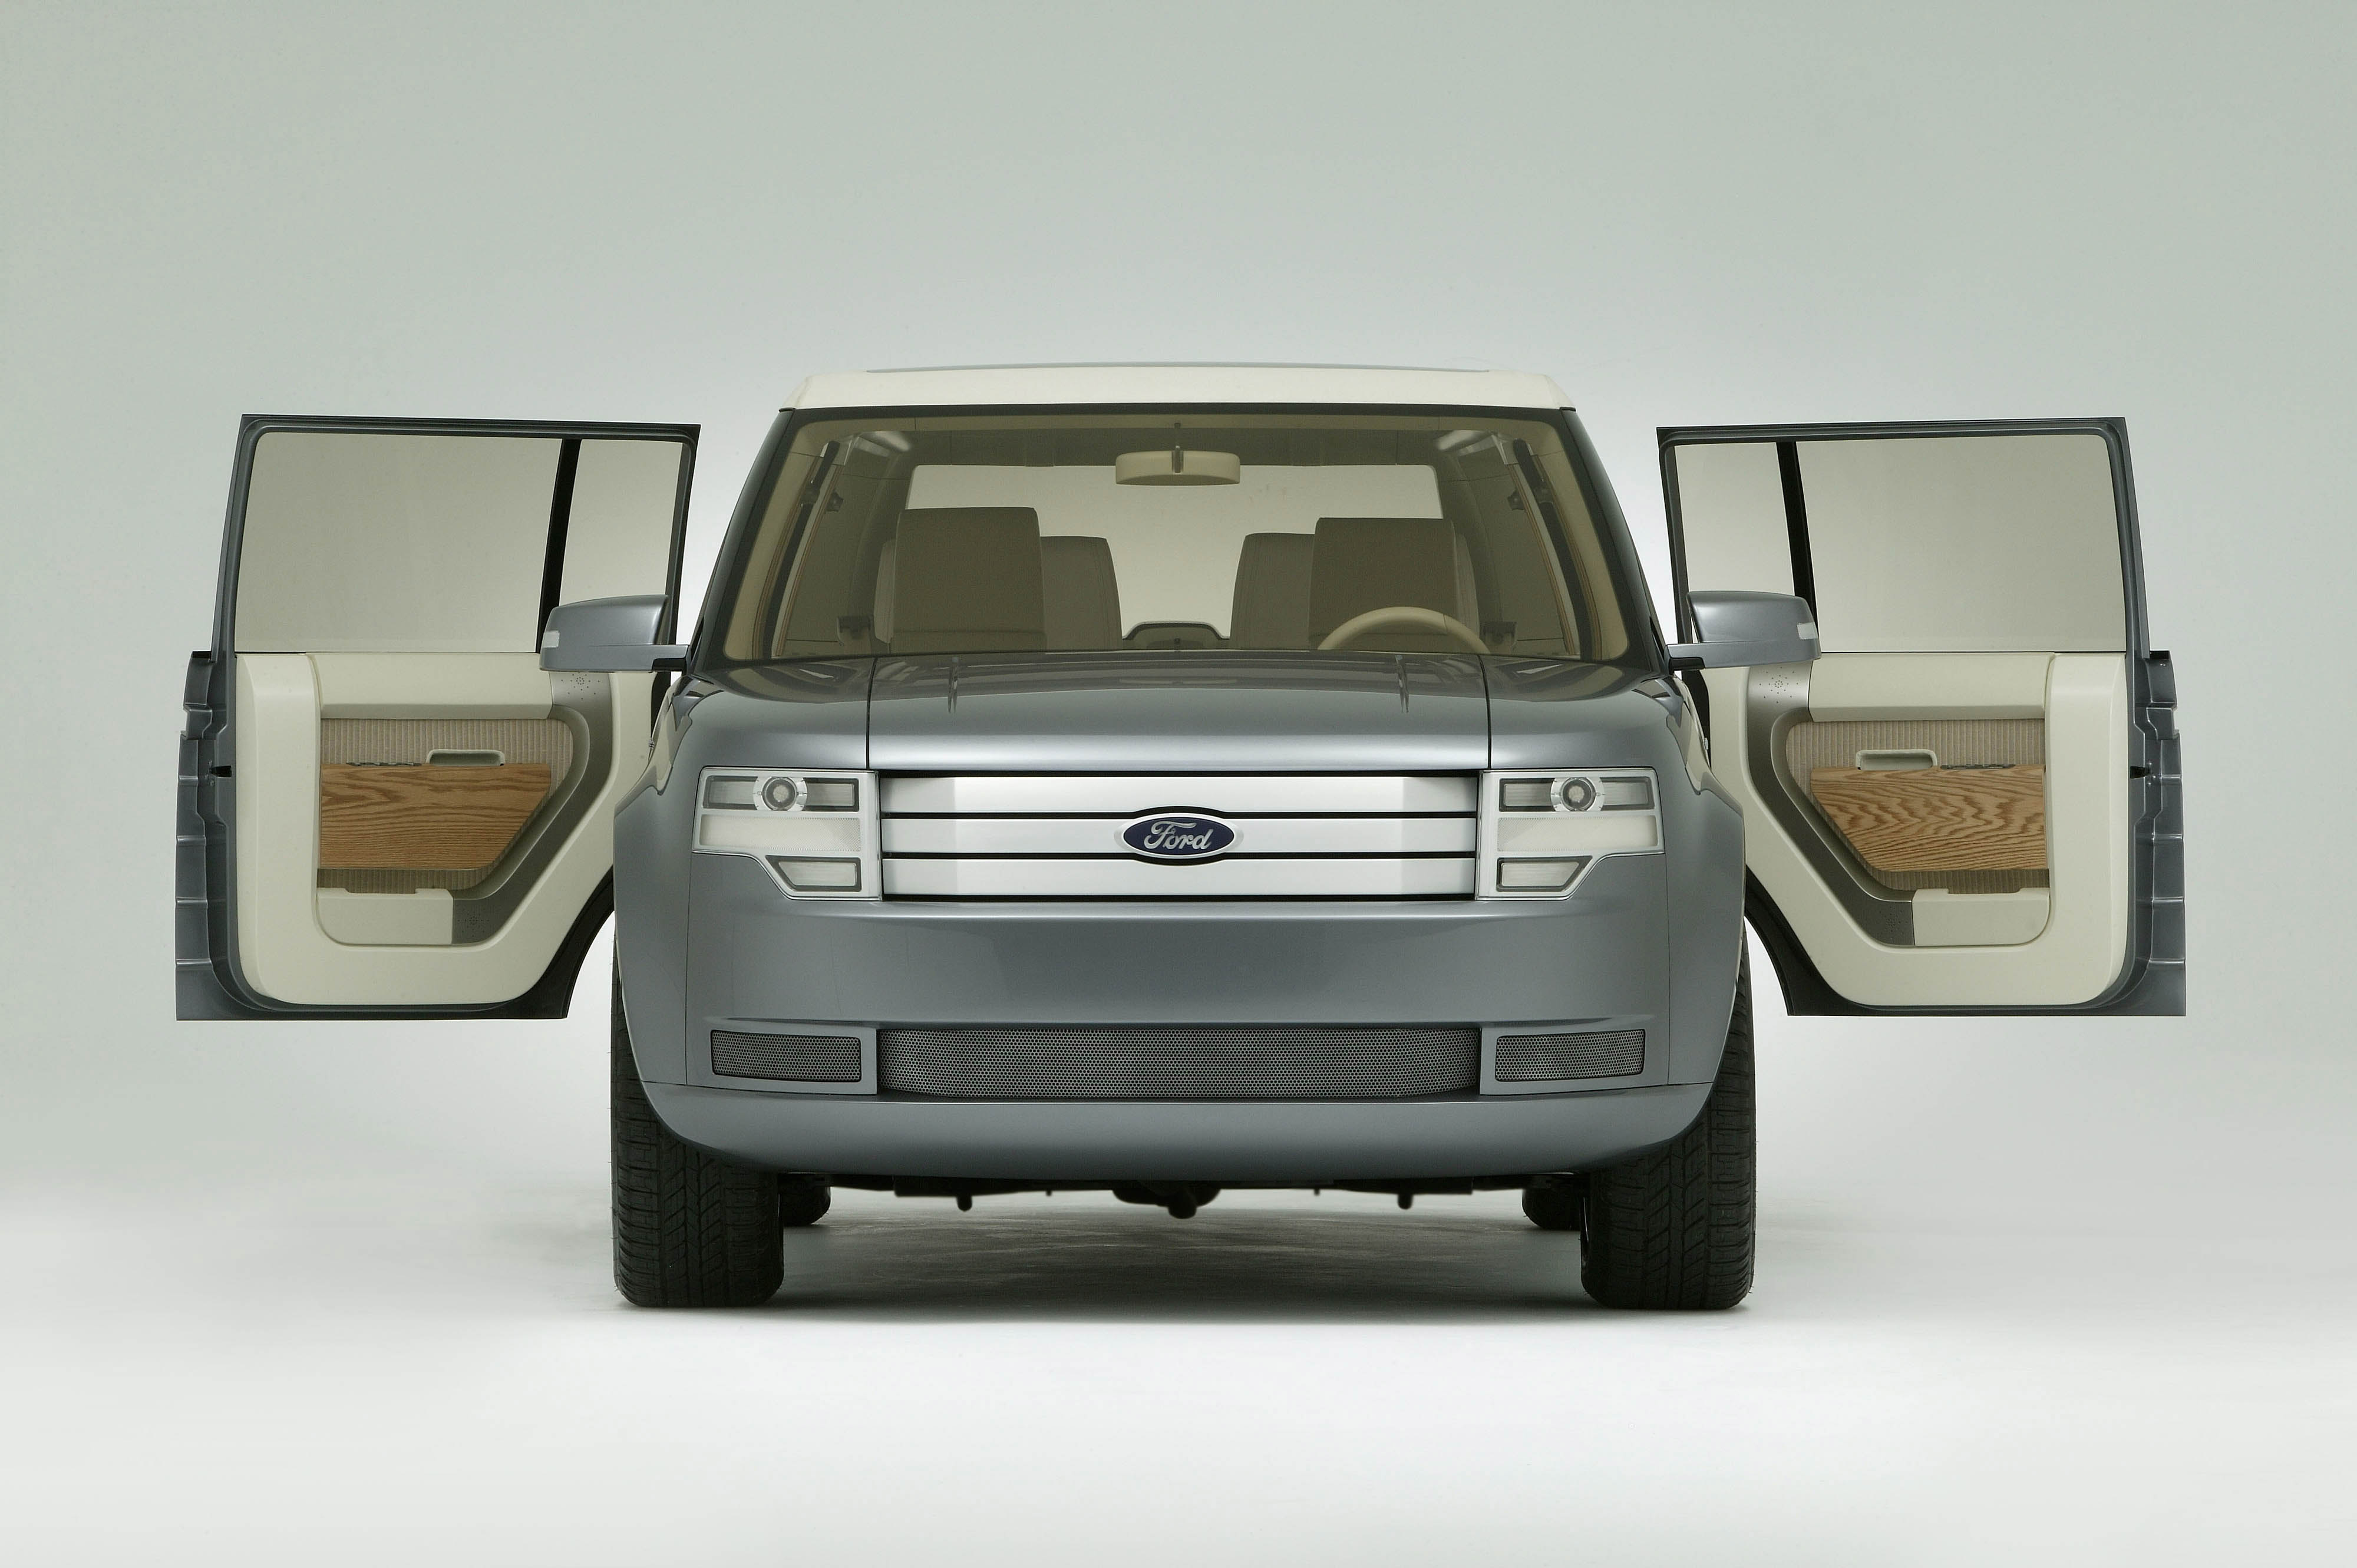 Ford Fairlane Concept